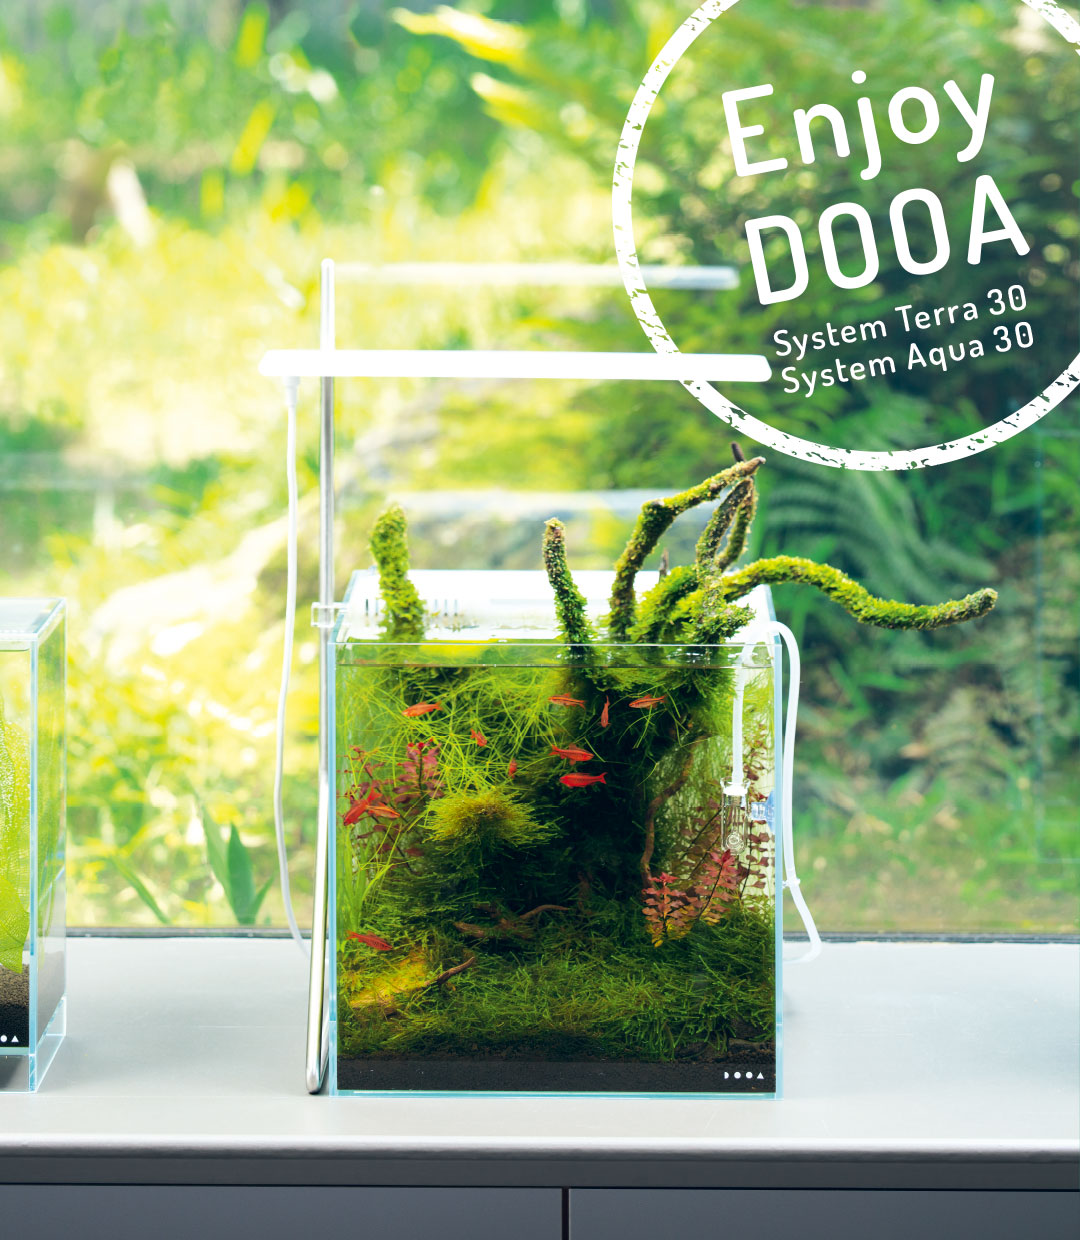 Enjoy DOOA ‘Effortlessly enjoy aquatic plants and Jungle Plants’